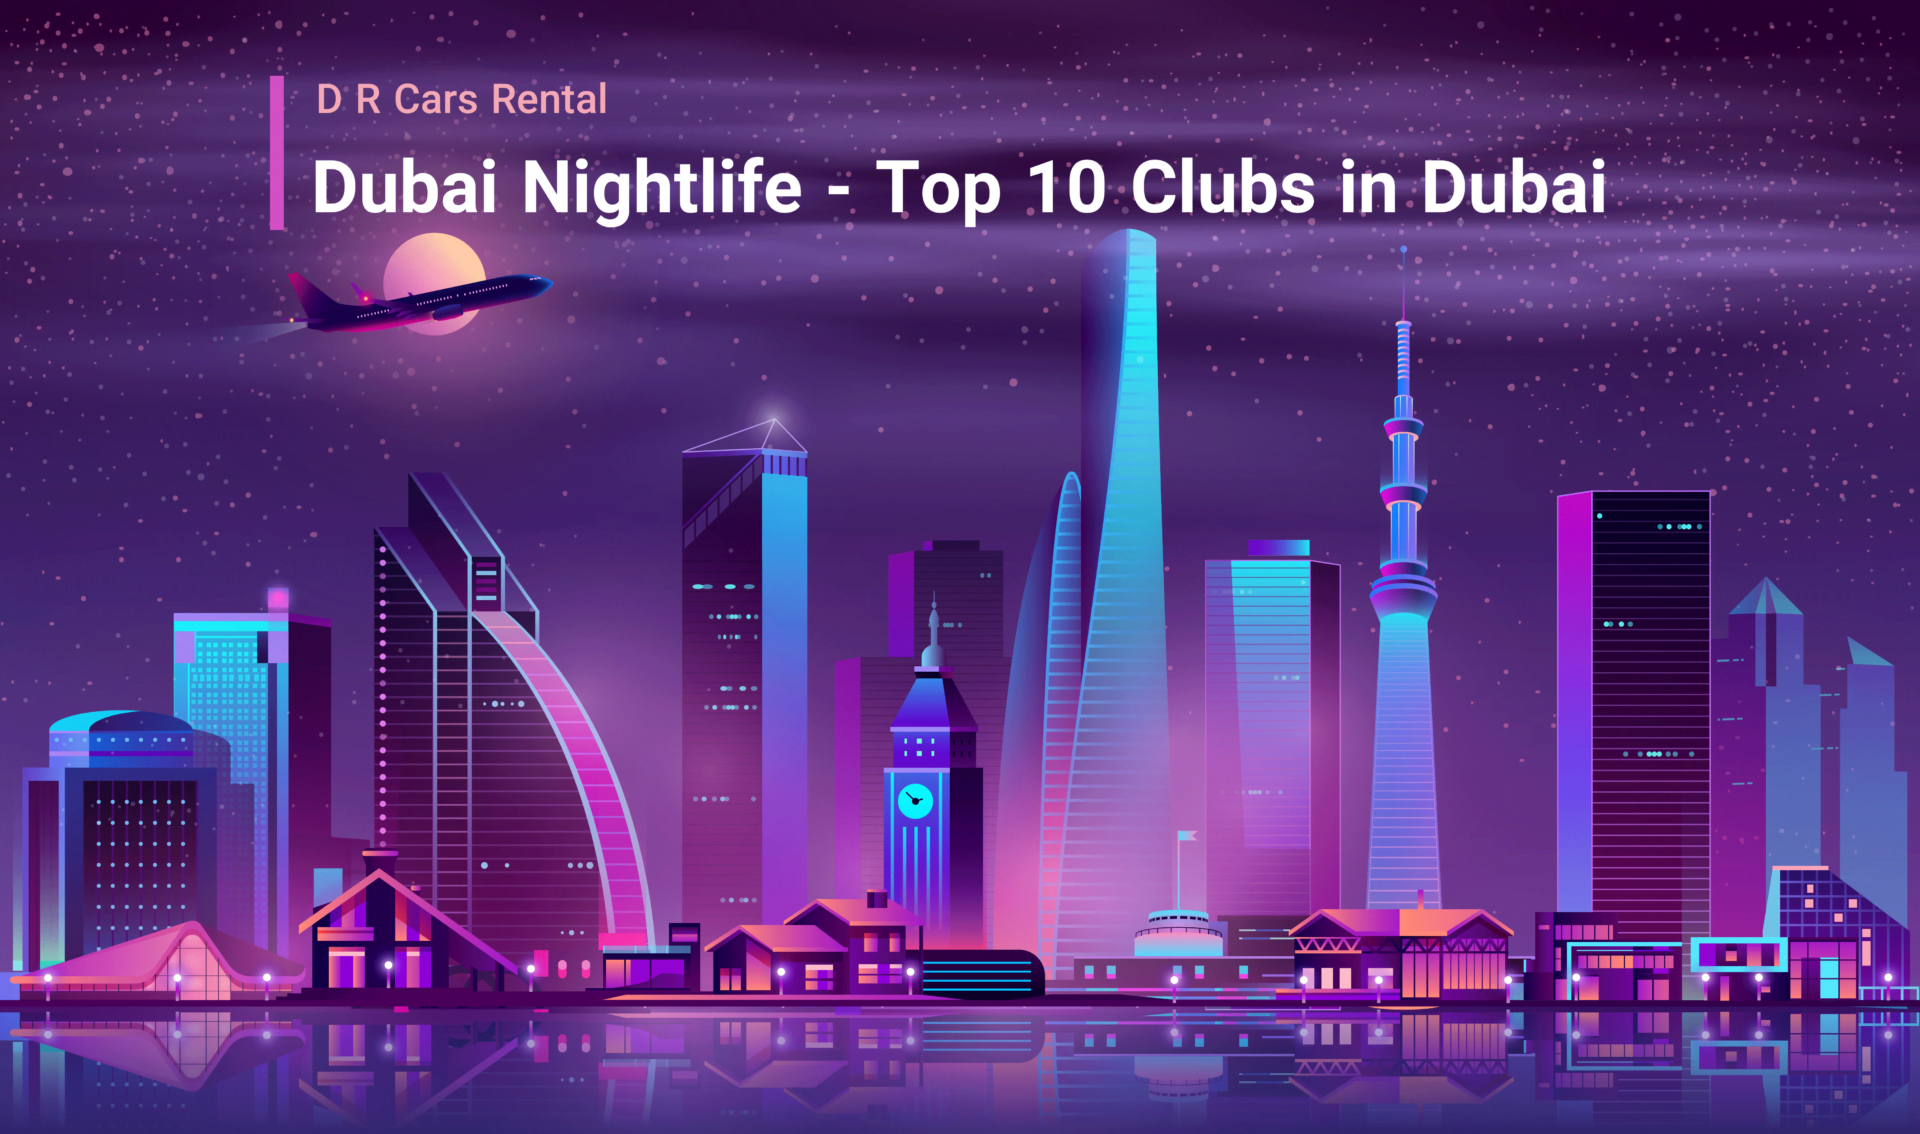 Dubai Nightlife - Top 10 Clubs in Dubai